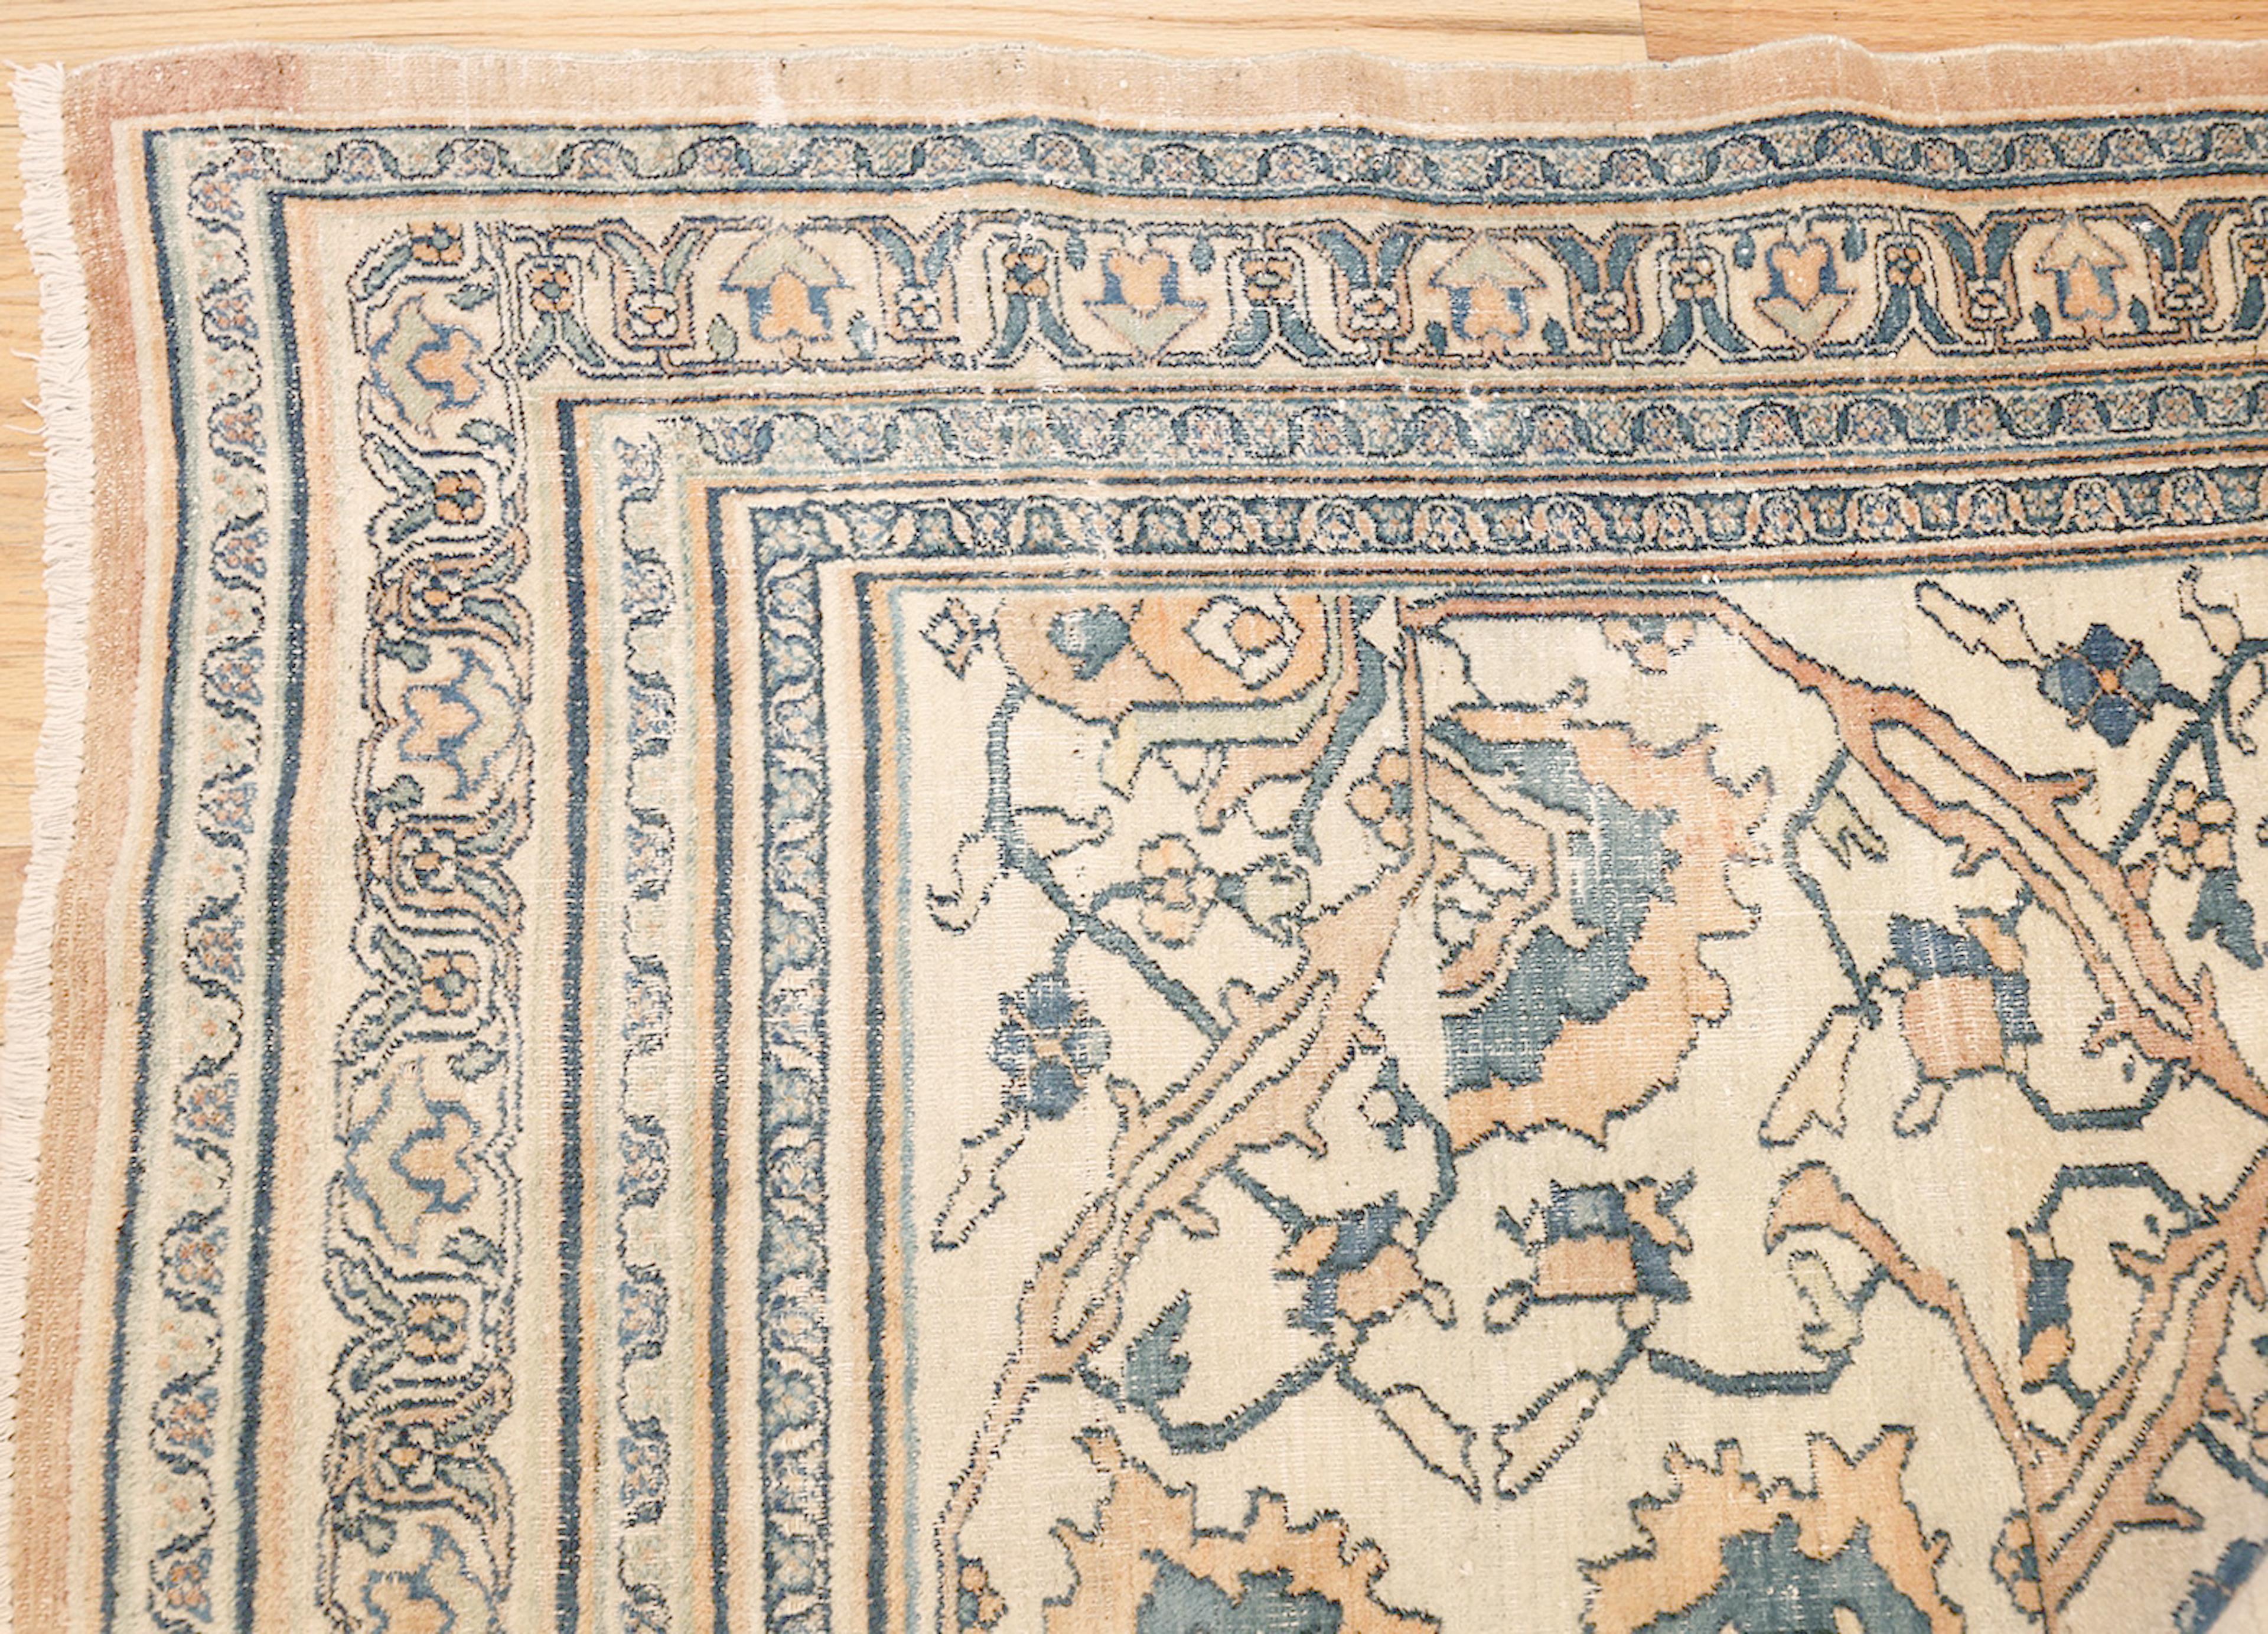 Antique Persian Khorassan Carpet, Country of Origin: Persia, Circa date: 1900. Size: 14 ft 6 in x 20 ft 7 in (4.42 m x 6.27 m)

